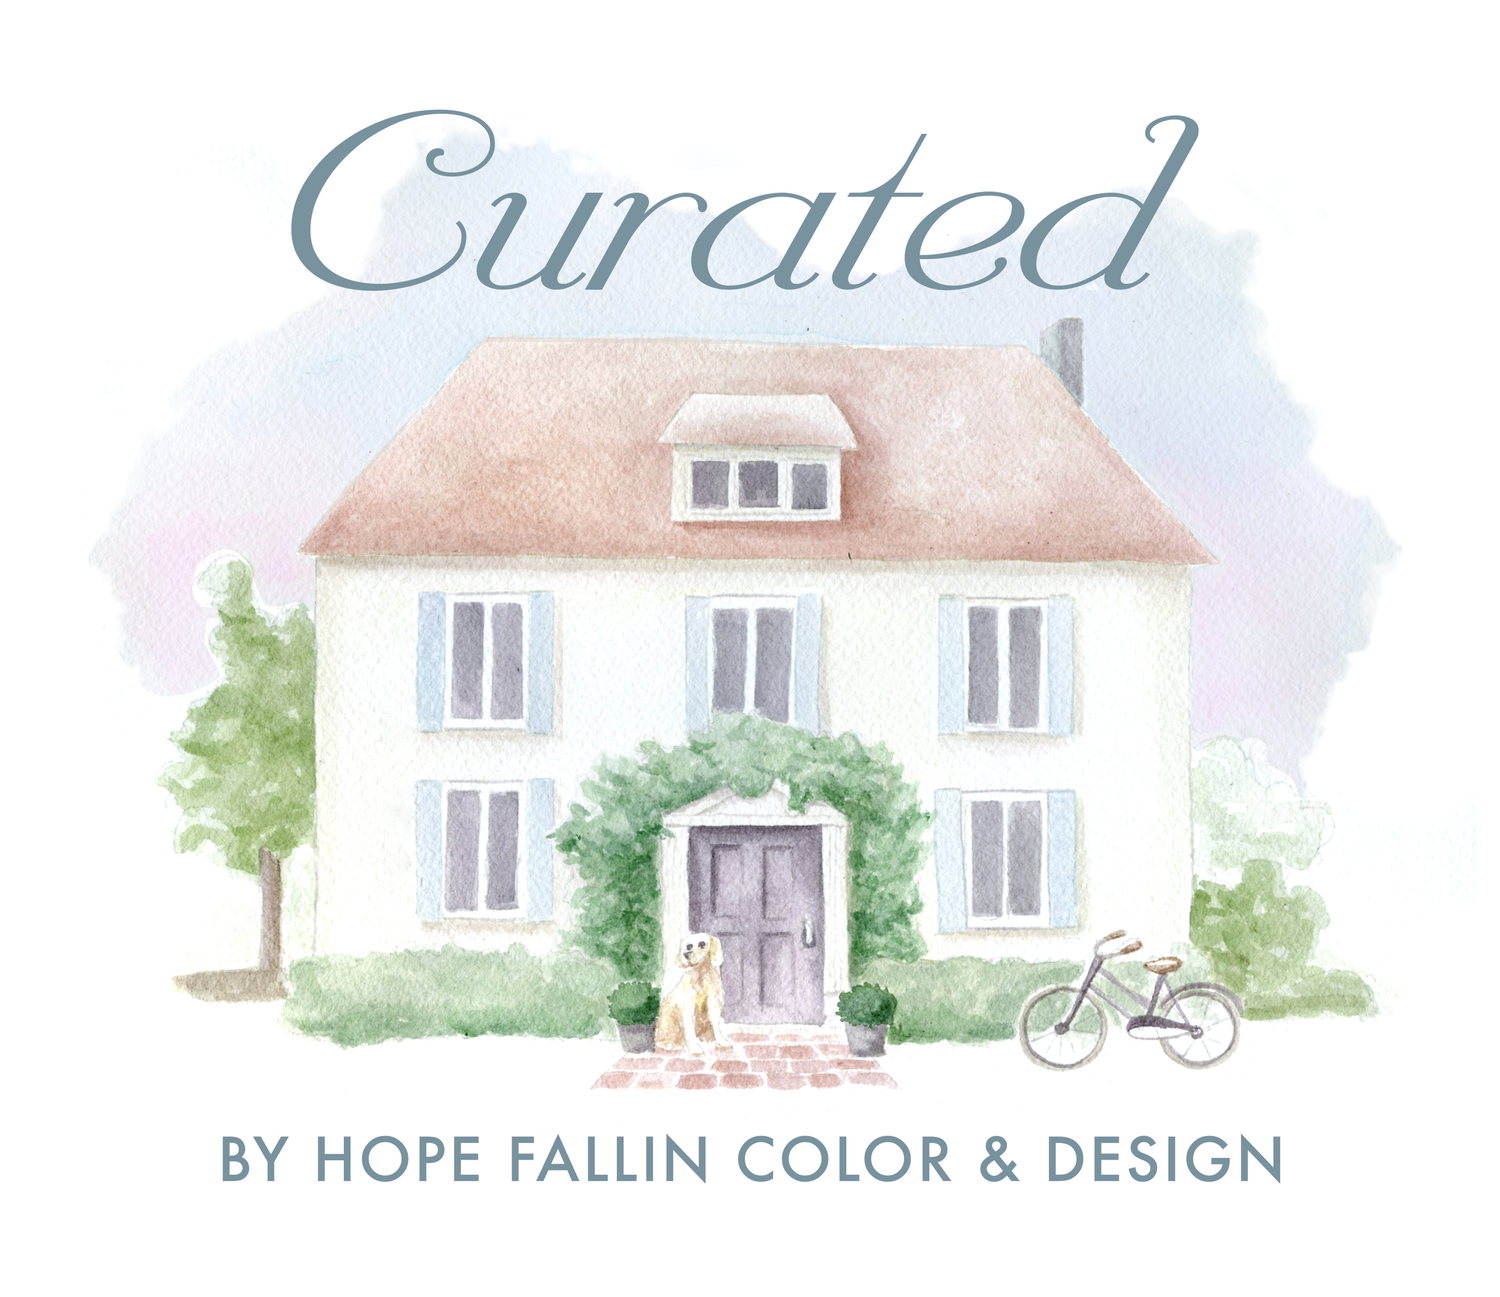 Hope Fallin Color & Design